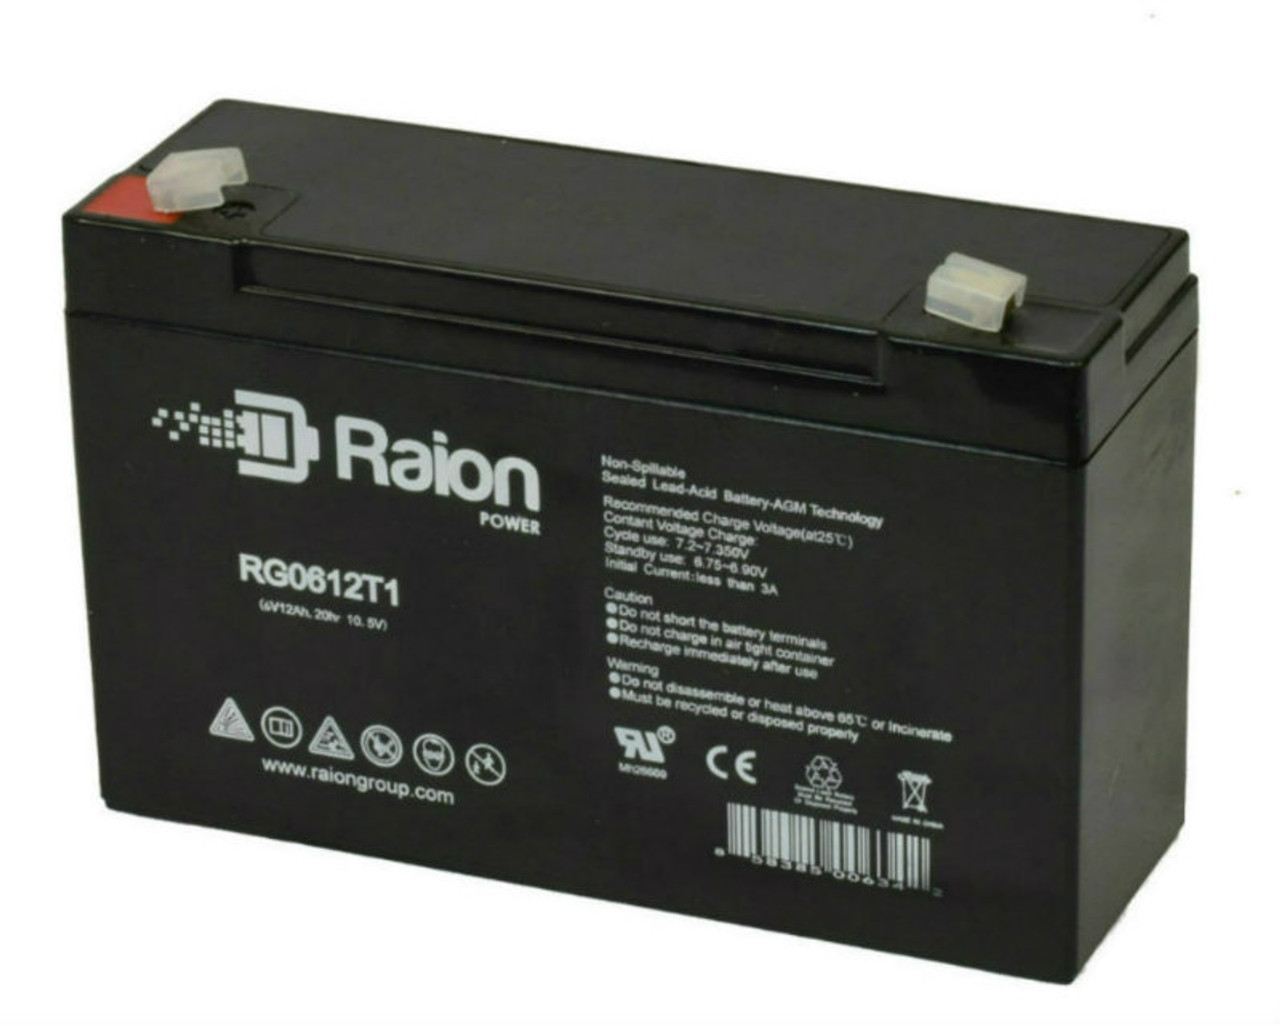 Raion Power RG06120T1 Replacement 6V 12Ah Emergency Light Battery for Sonnenschein A205/12G